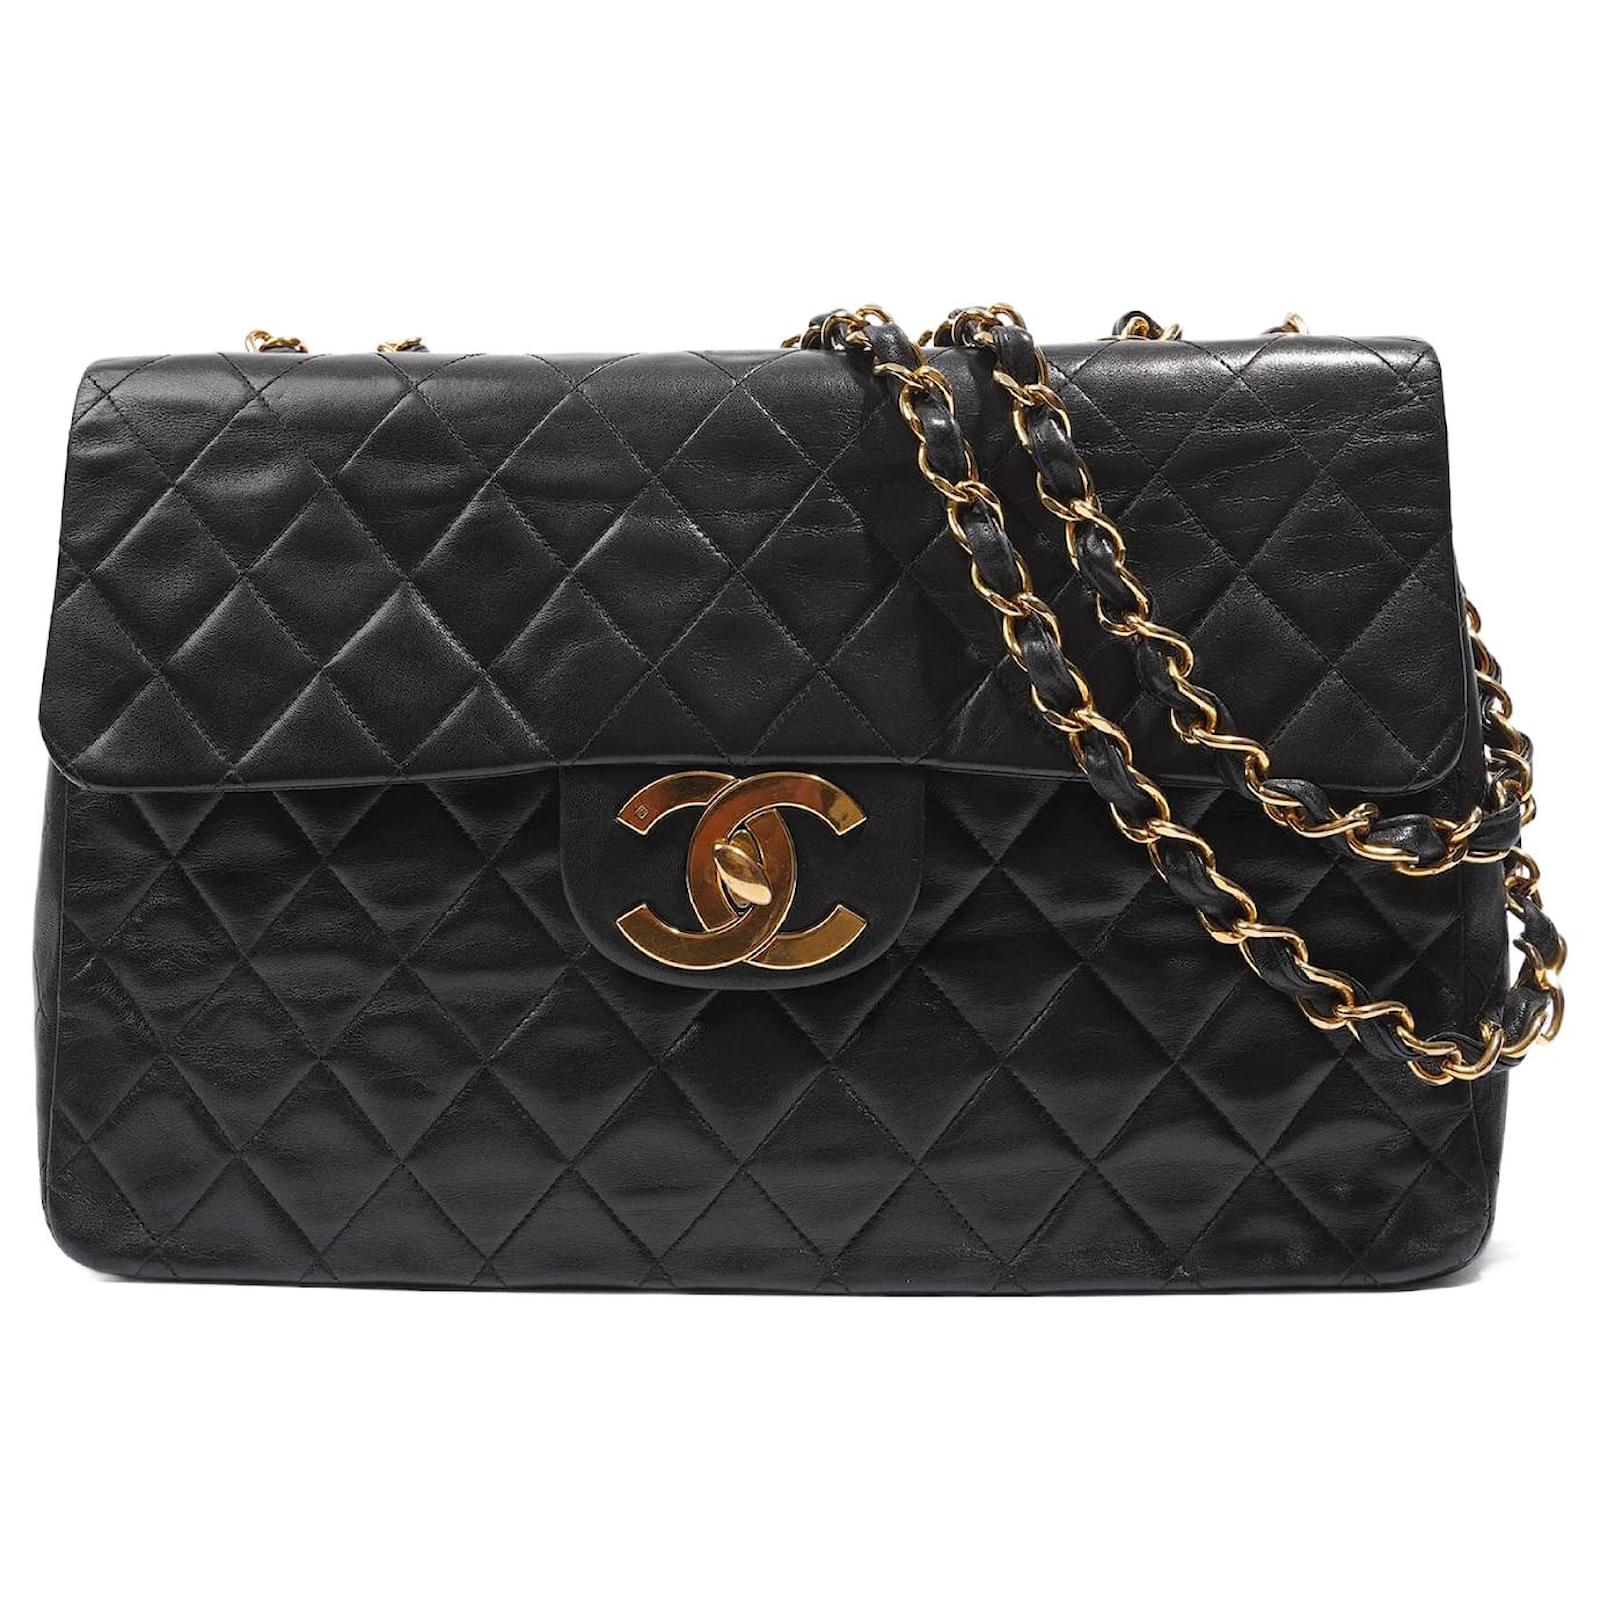 Handbags Chanel Chanel Womens Single Flap Black Lambskin / Gold Large